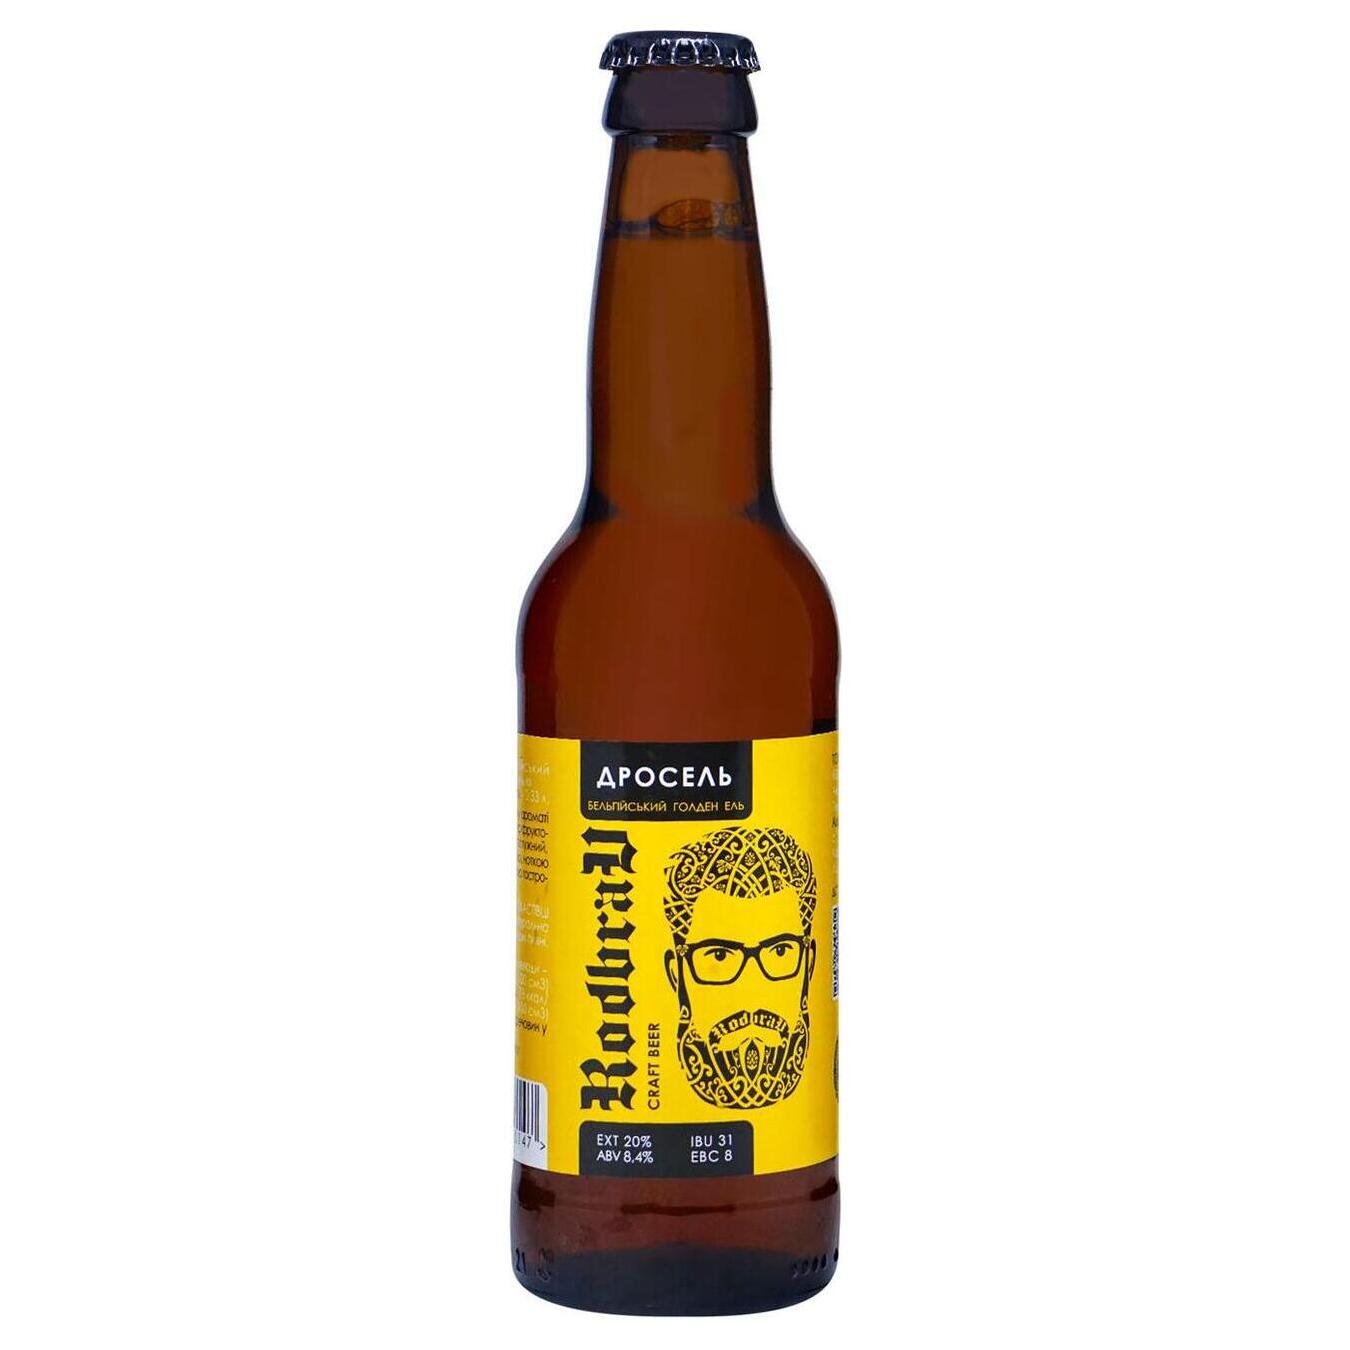 Beer Rodbrau bottle Belgian Golden Ale Drosel light 8.4% 0.33l glass bottle